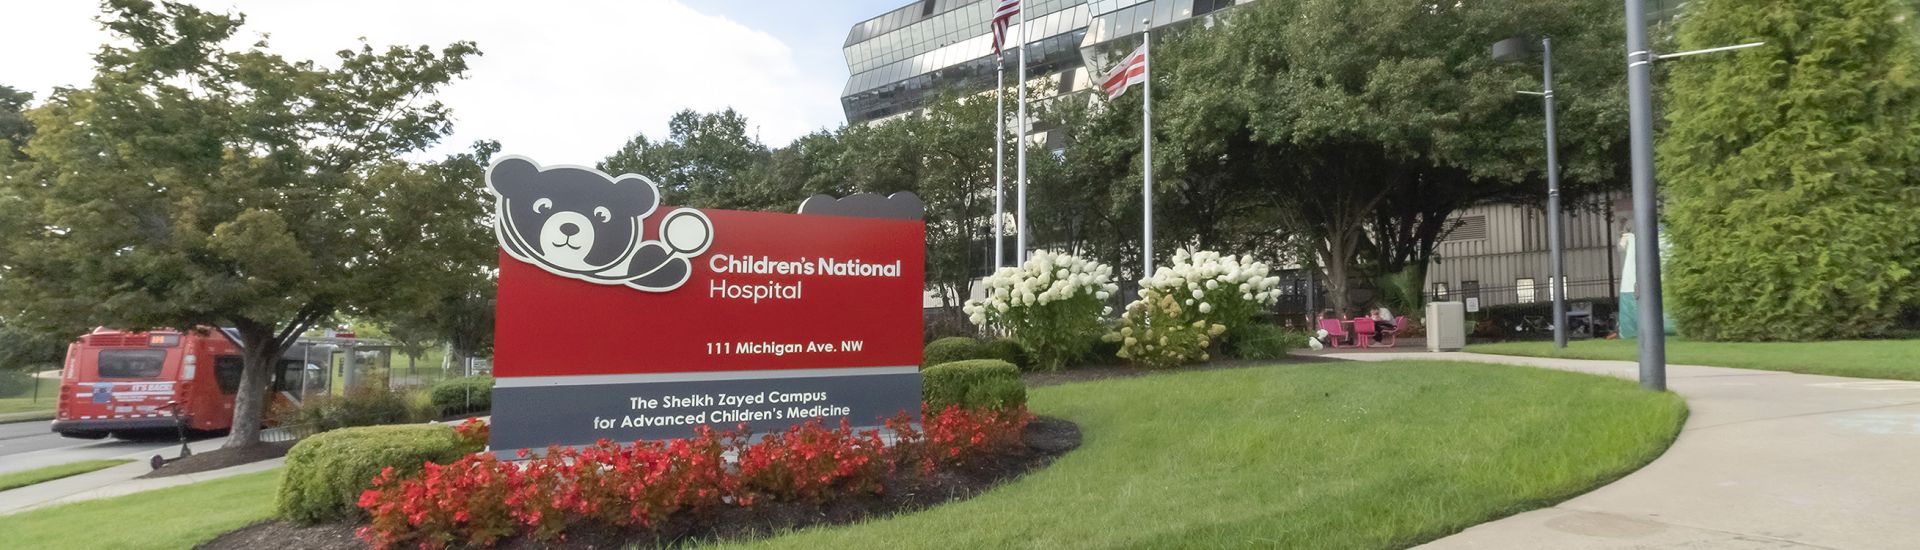 Children's National Health System